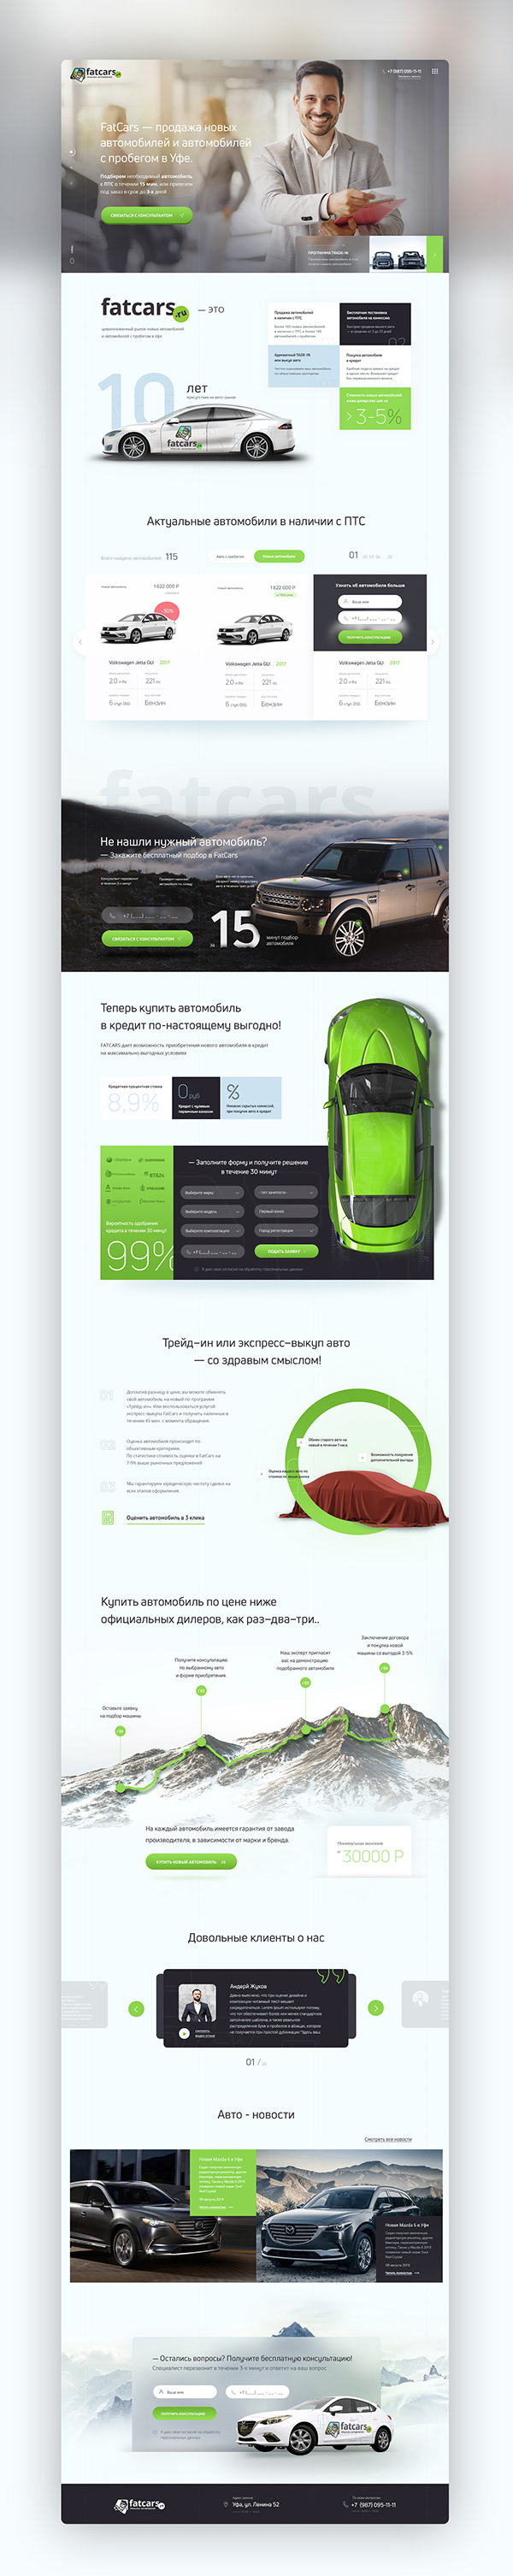 Onepage design - fatcars auto company